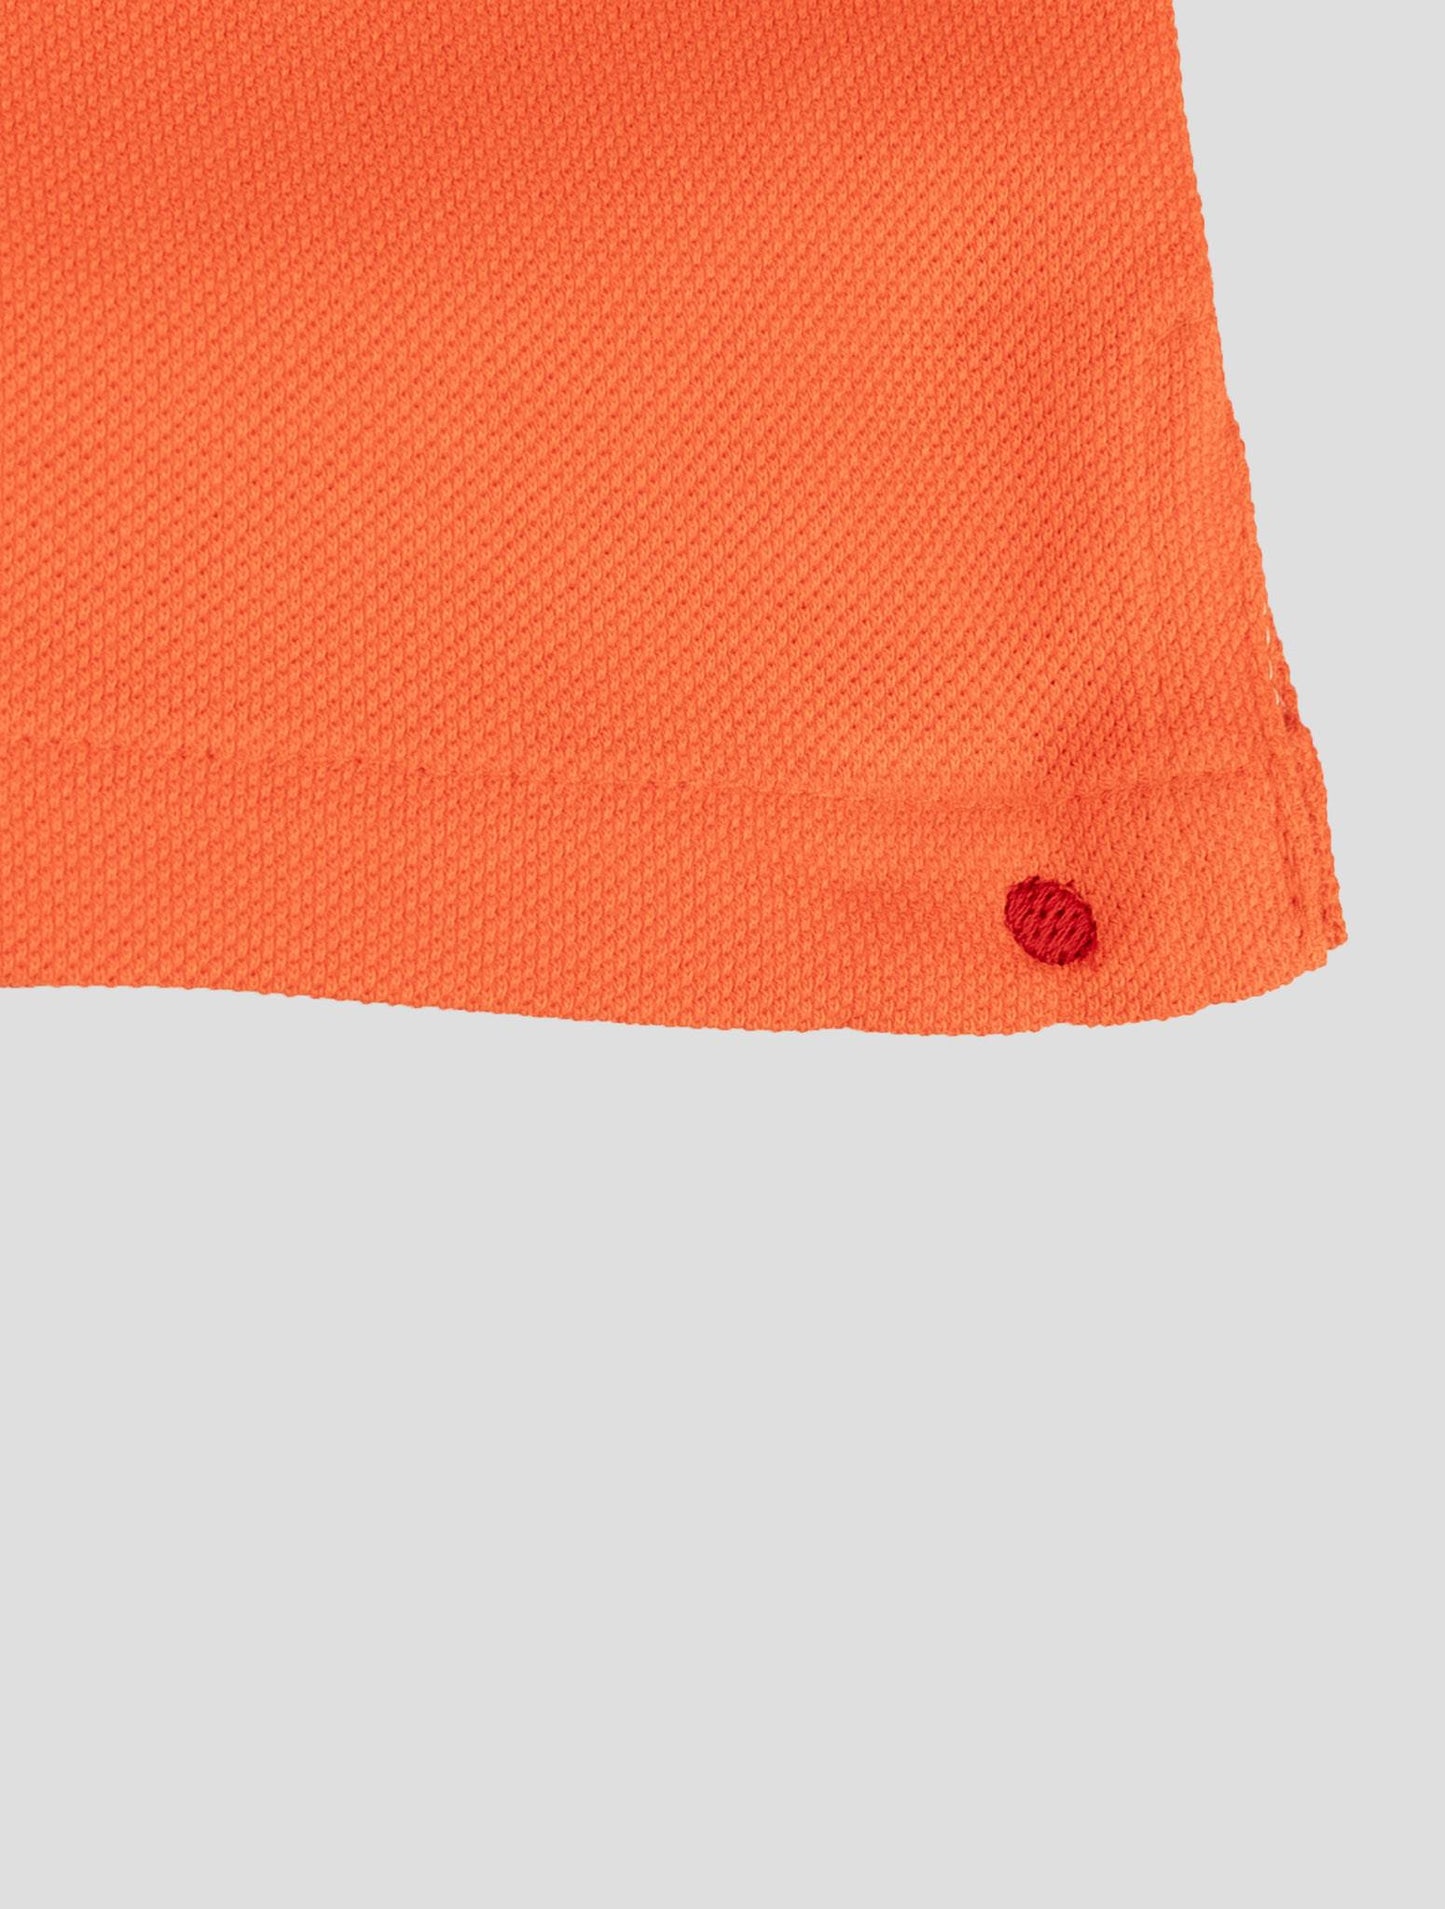 Kiton Orange Cotton Short Pants